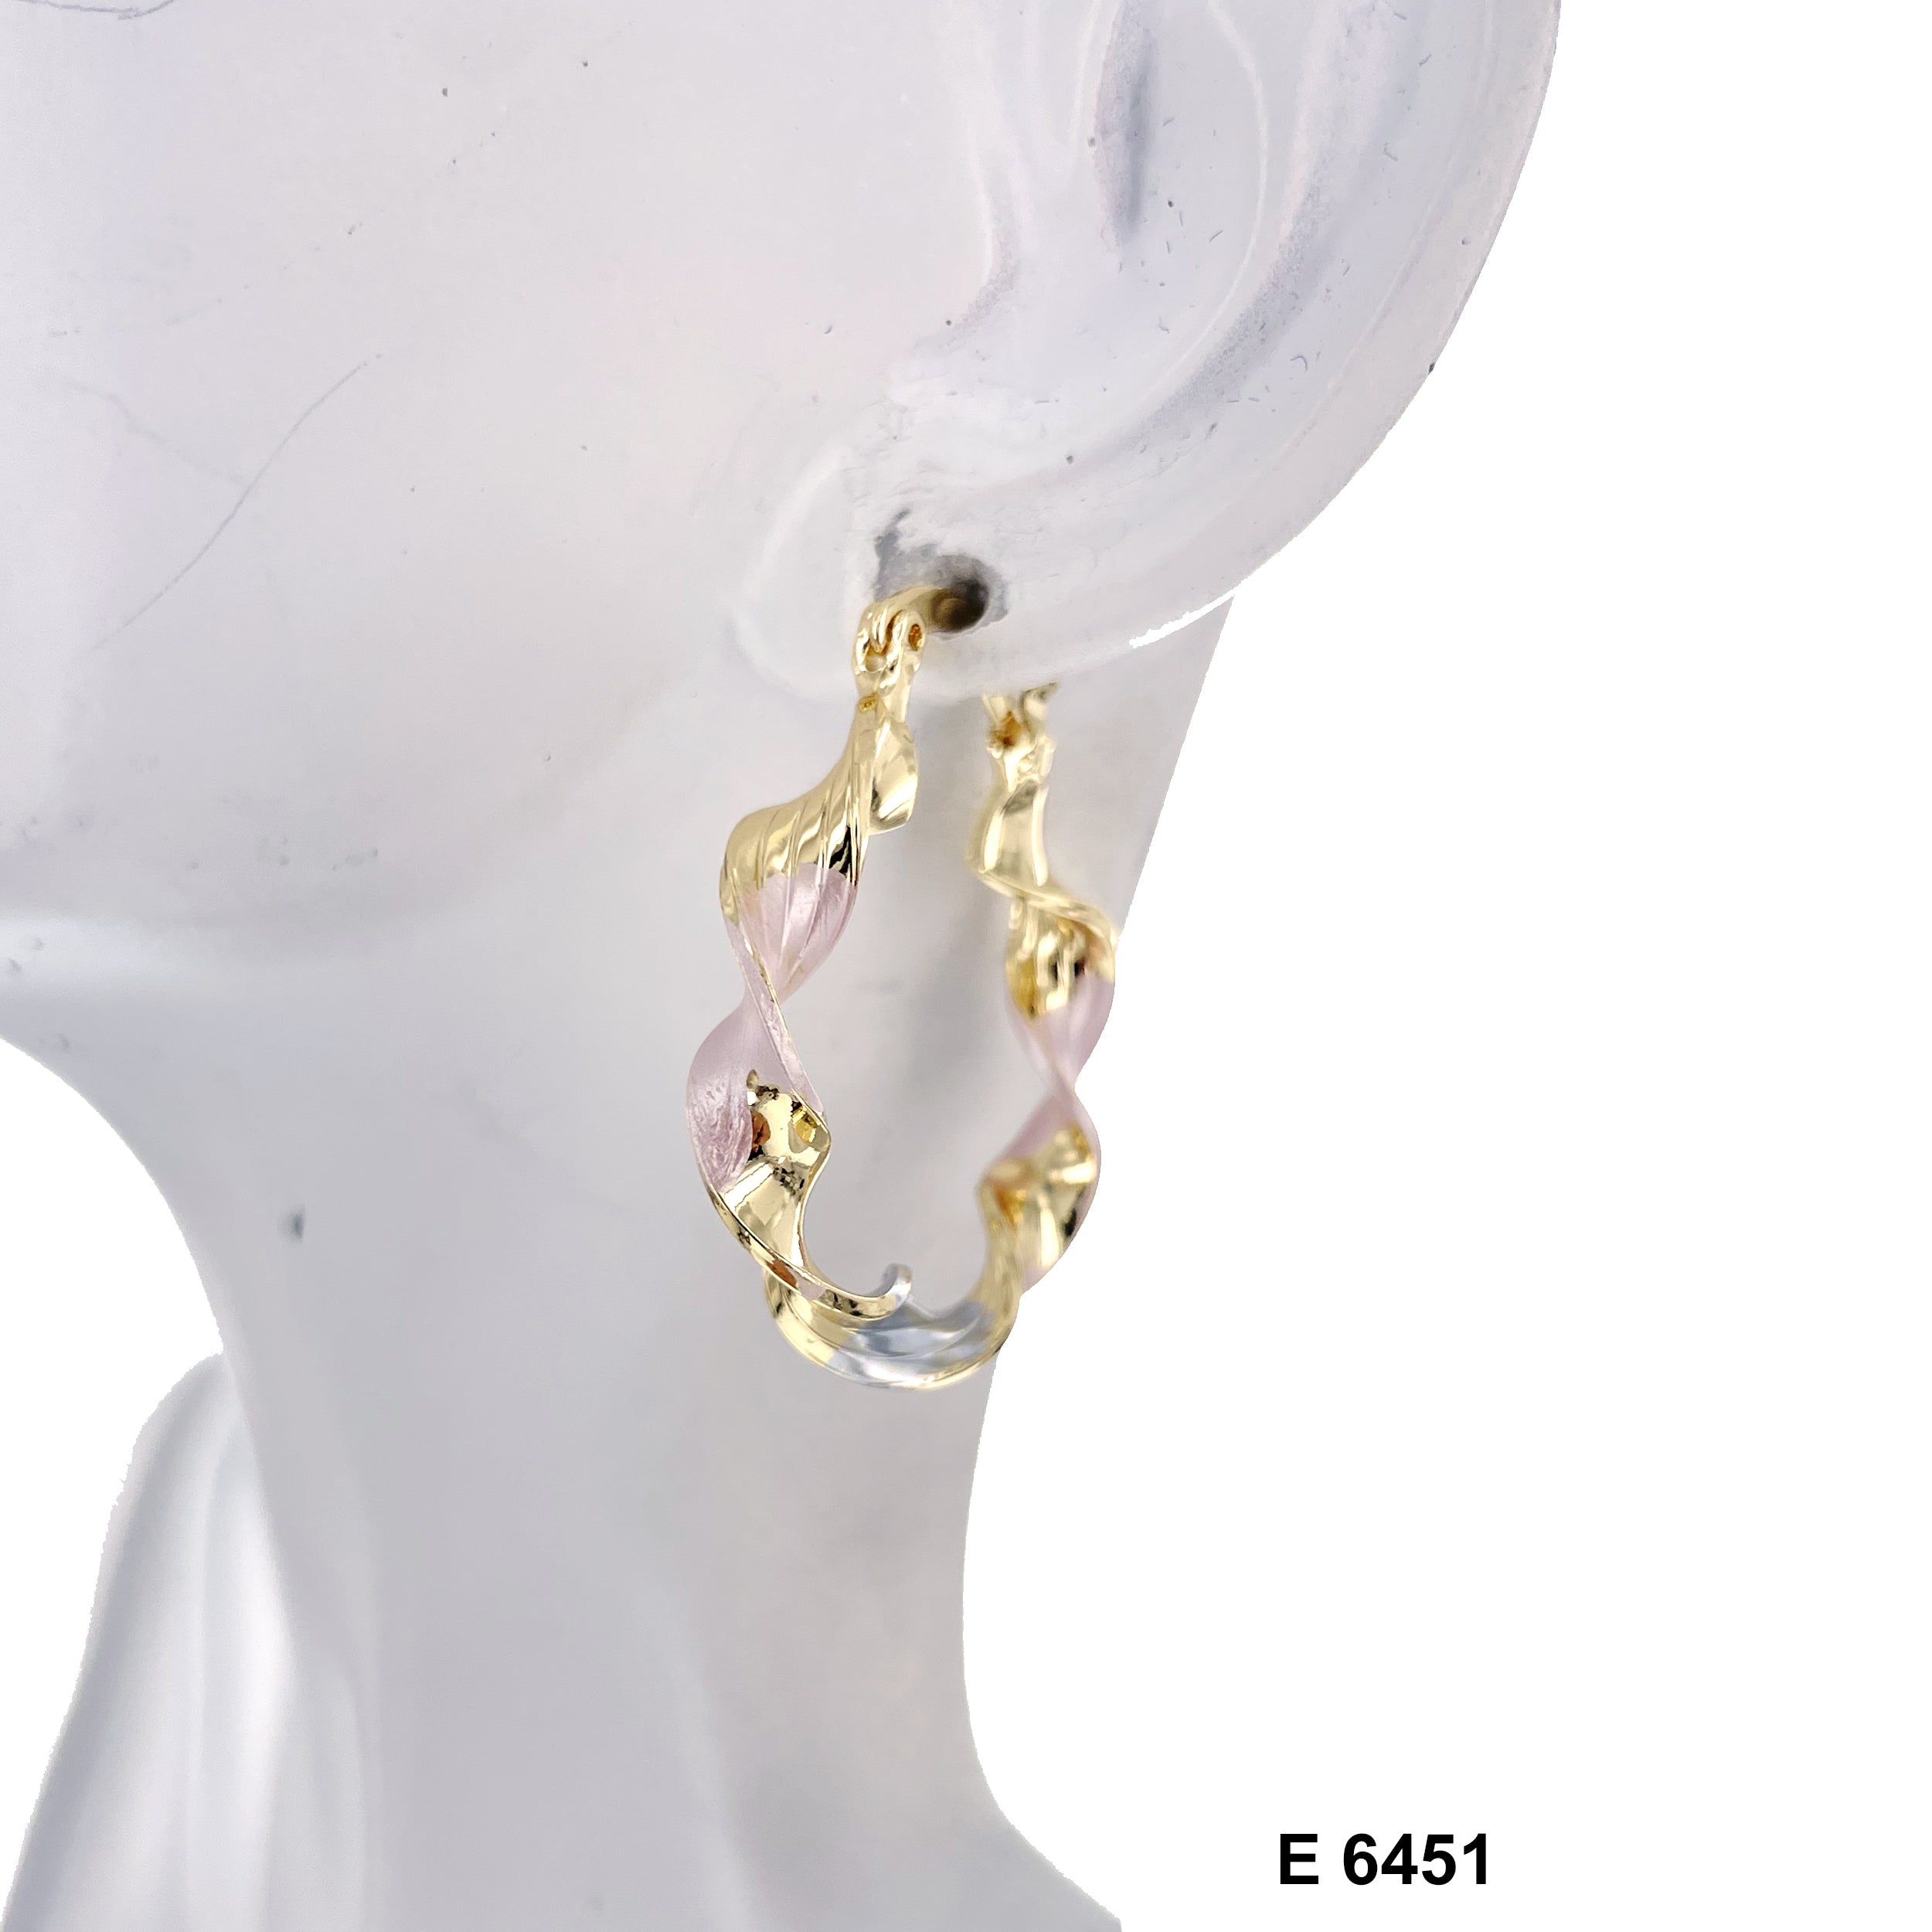 Engraved Hoop Earrings E 6451